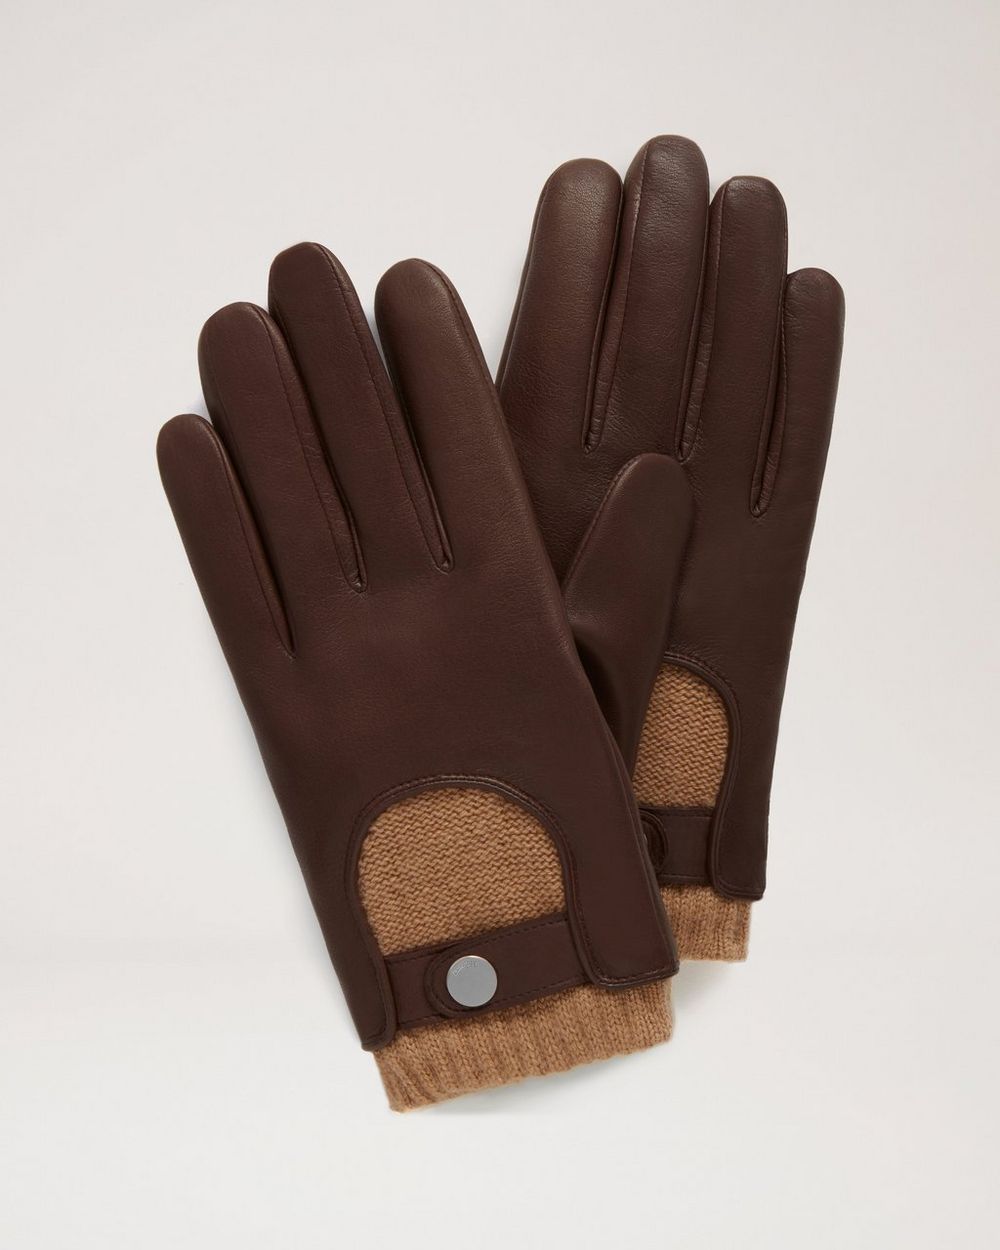 Dries Van Noten Leder Handschuhe aus Leder in Braun für Herren Herren Accessoires Handschuhe 